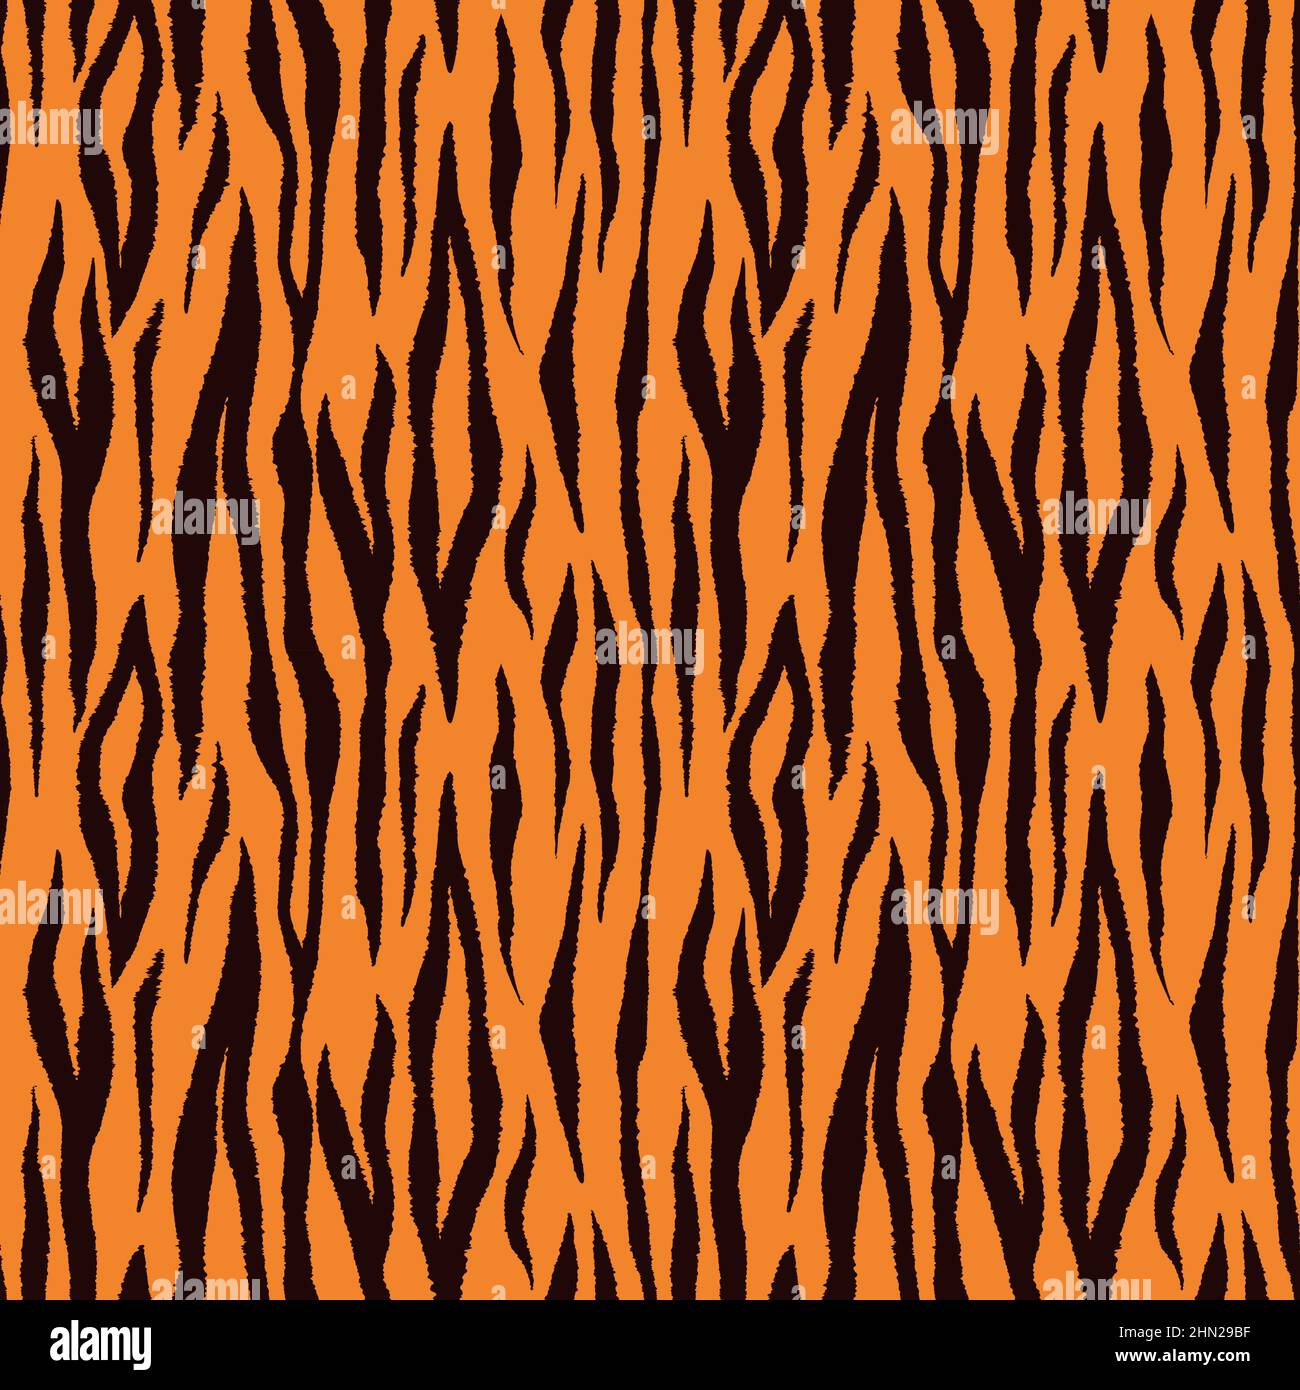 Tiger print, animal skin, seamless pattern with tiger stripes